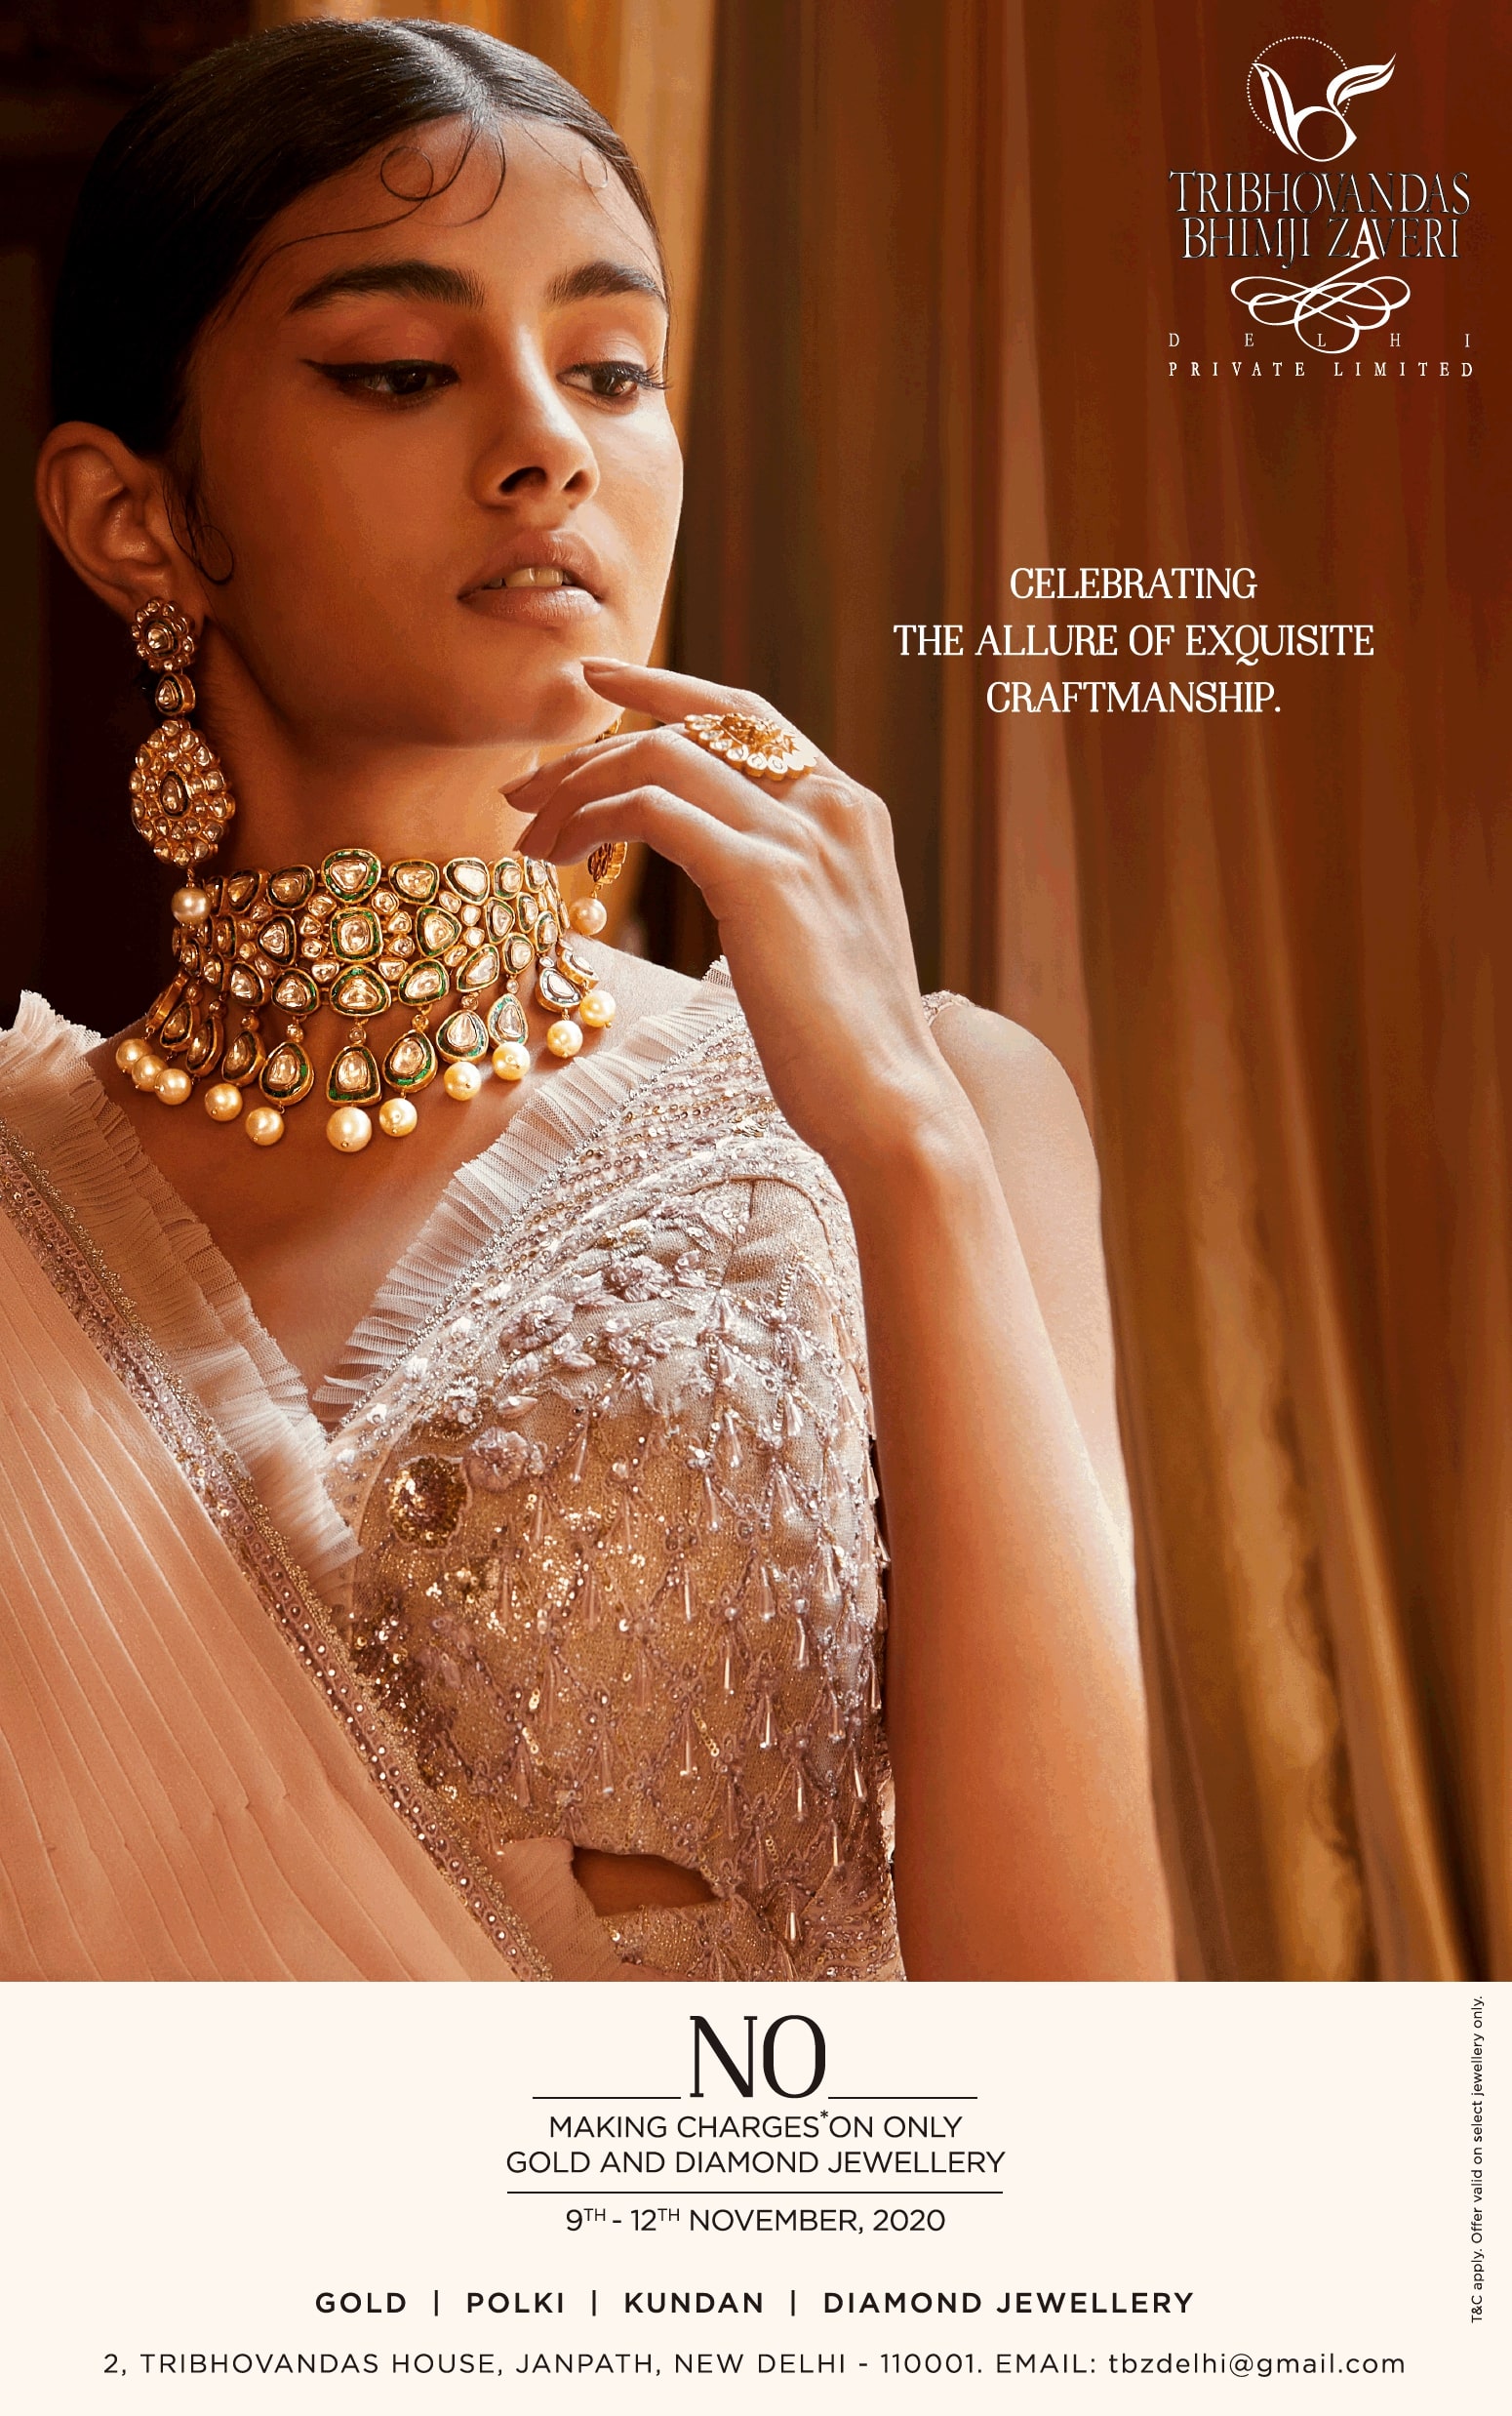 tribhovandas-bhimji-zaveri-jewellers-celebrating-the-allure-of-exquisite-craftmanship-ad-toi-chandigarh-9-11-2020